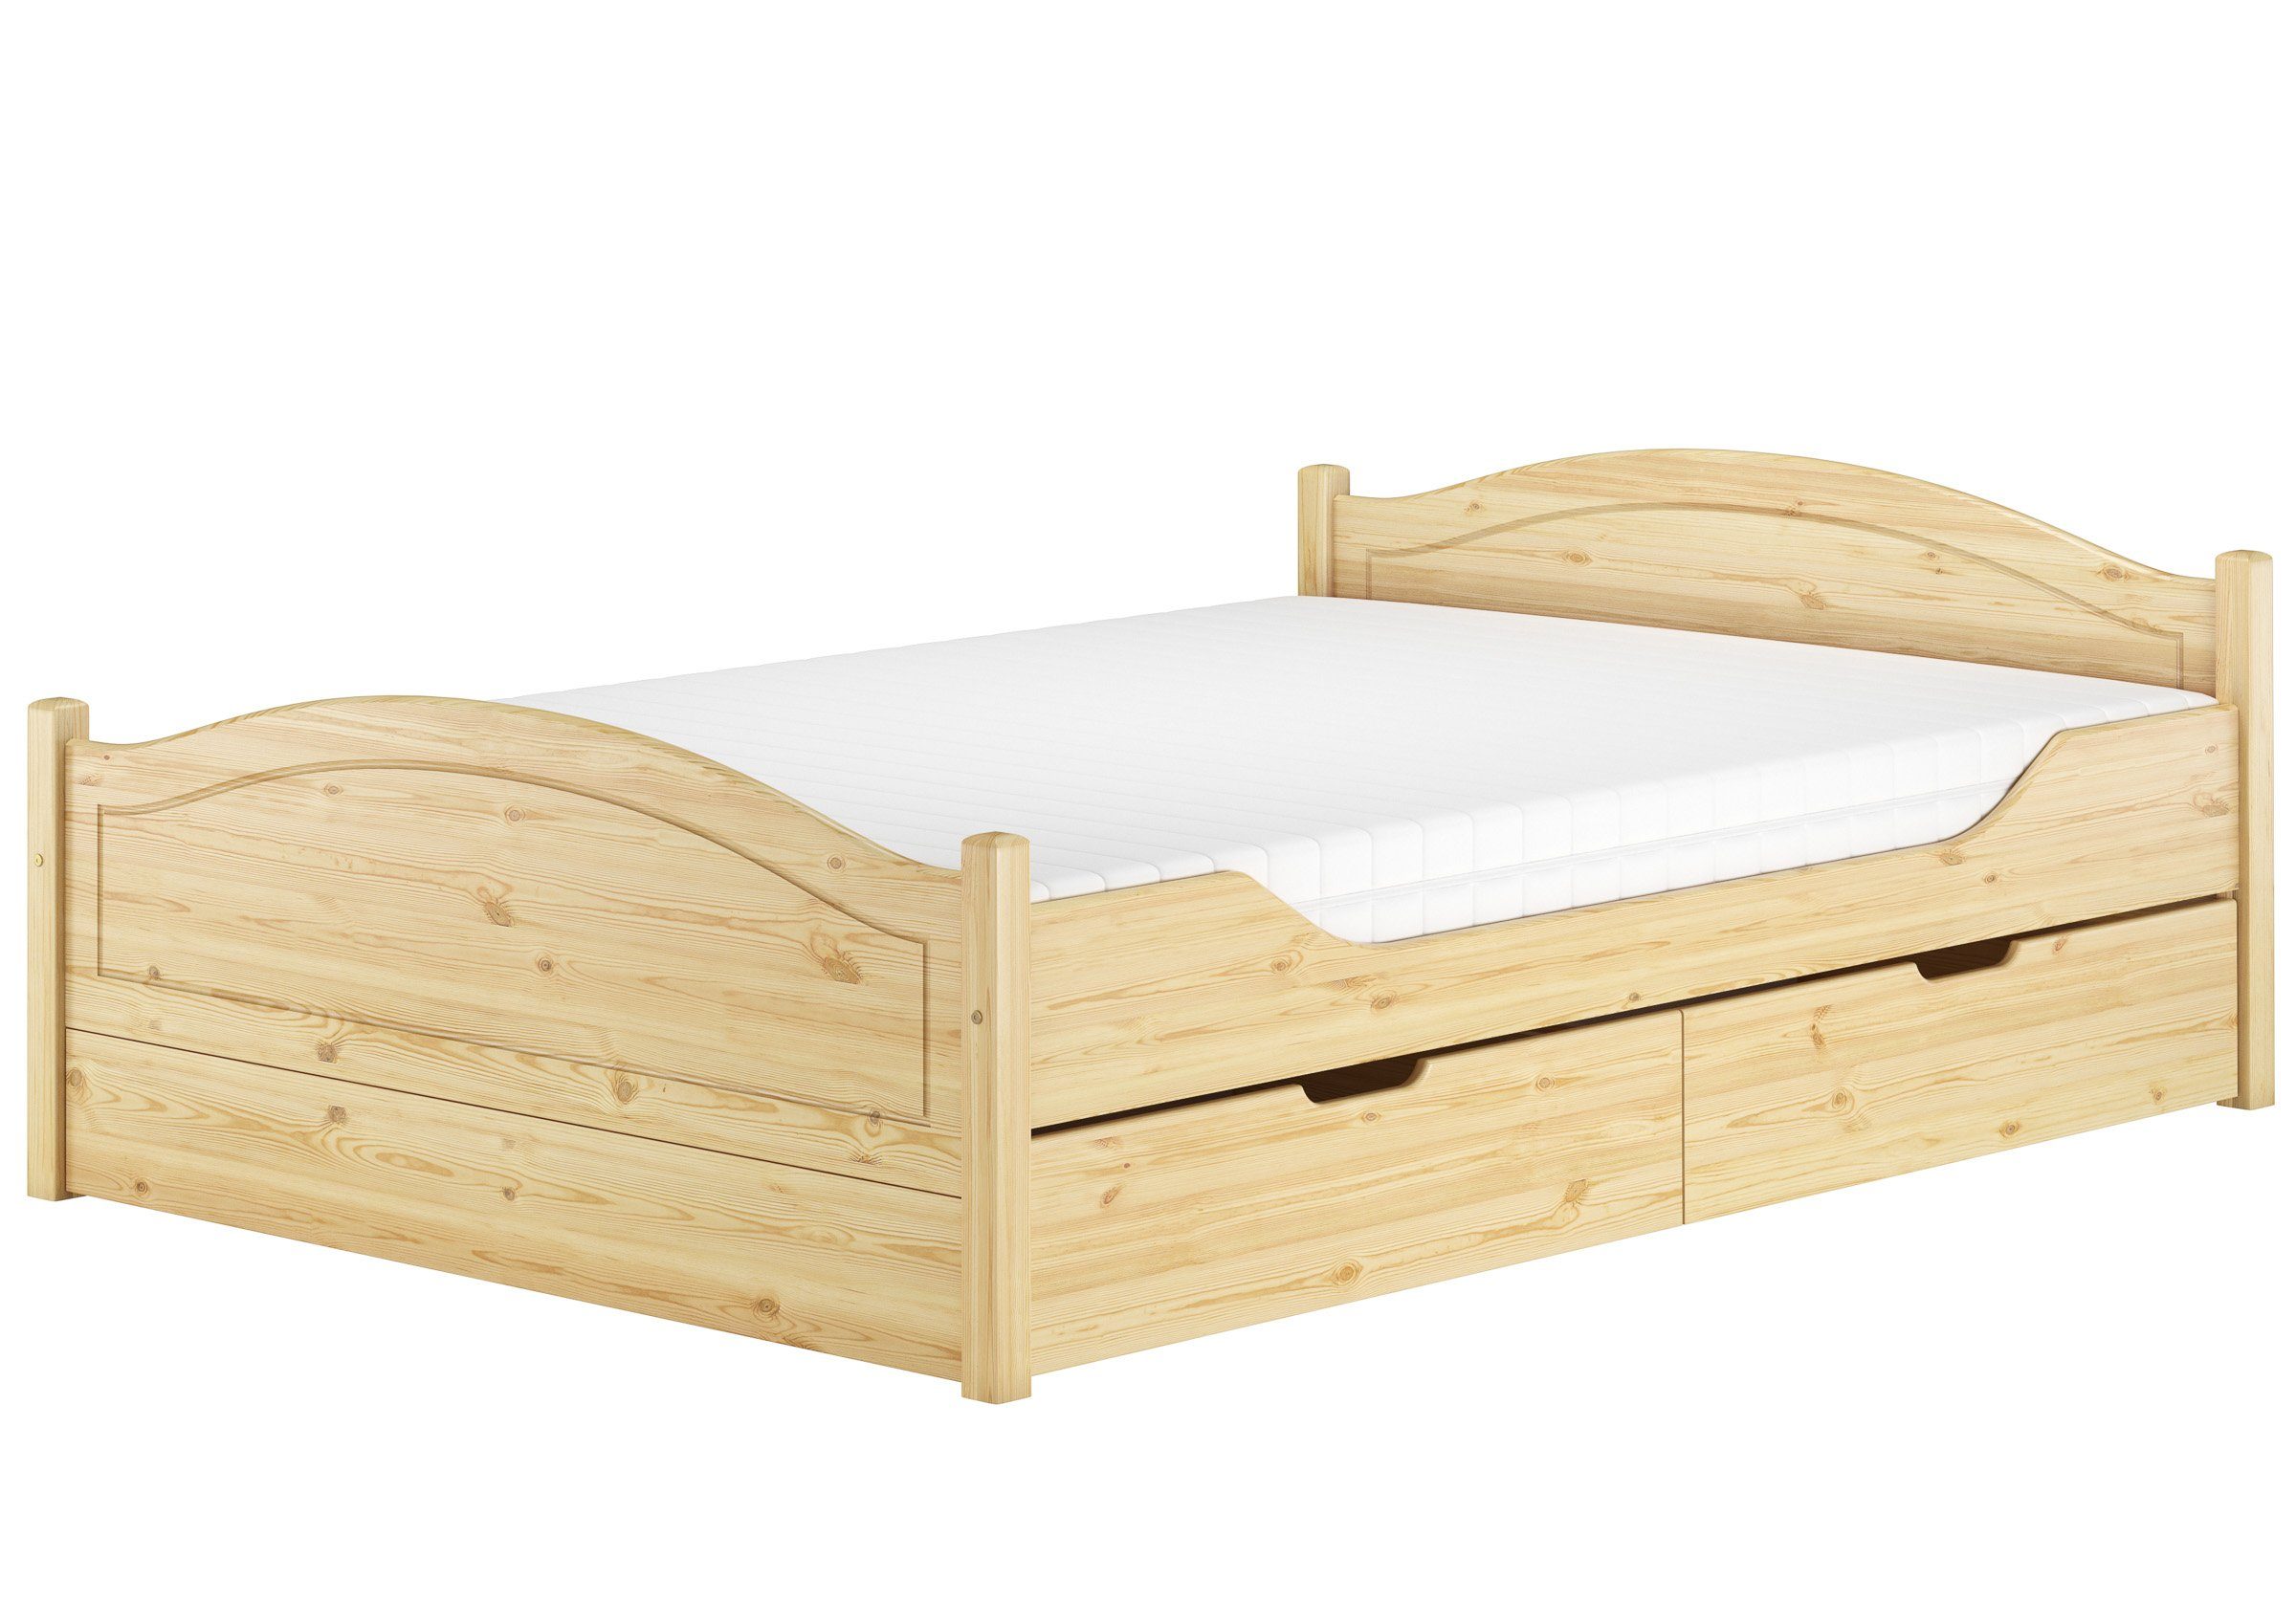 ERST-HOLZ Bett Doppelbett 140x200 Komplettset Bett mit Staukasten, Kieferfarblos lackiert